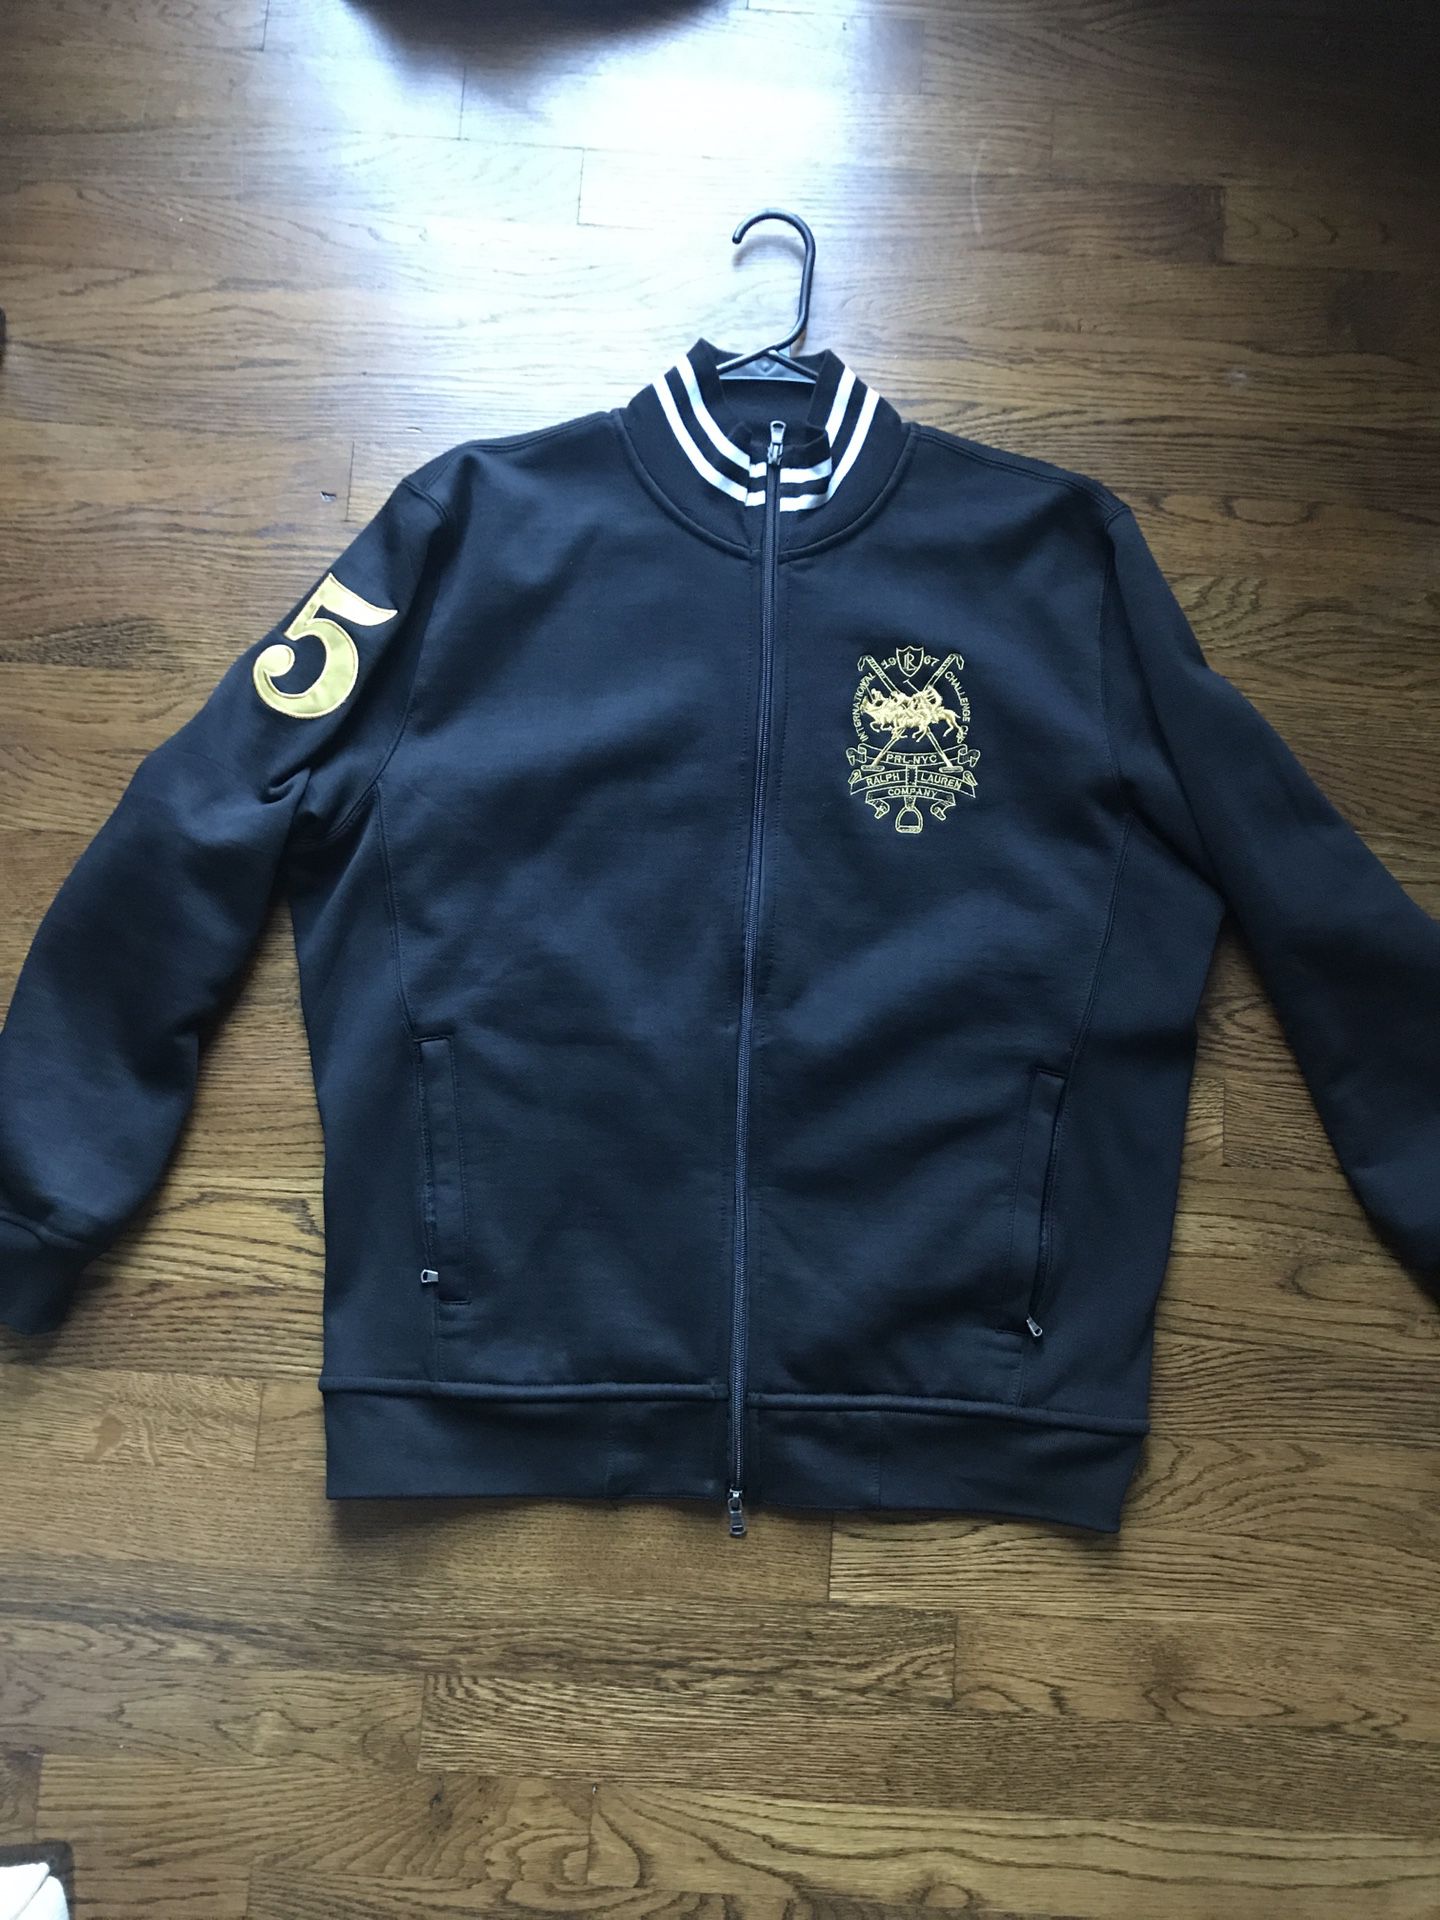 Polo Ralph Lauren zip jacket size XL